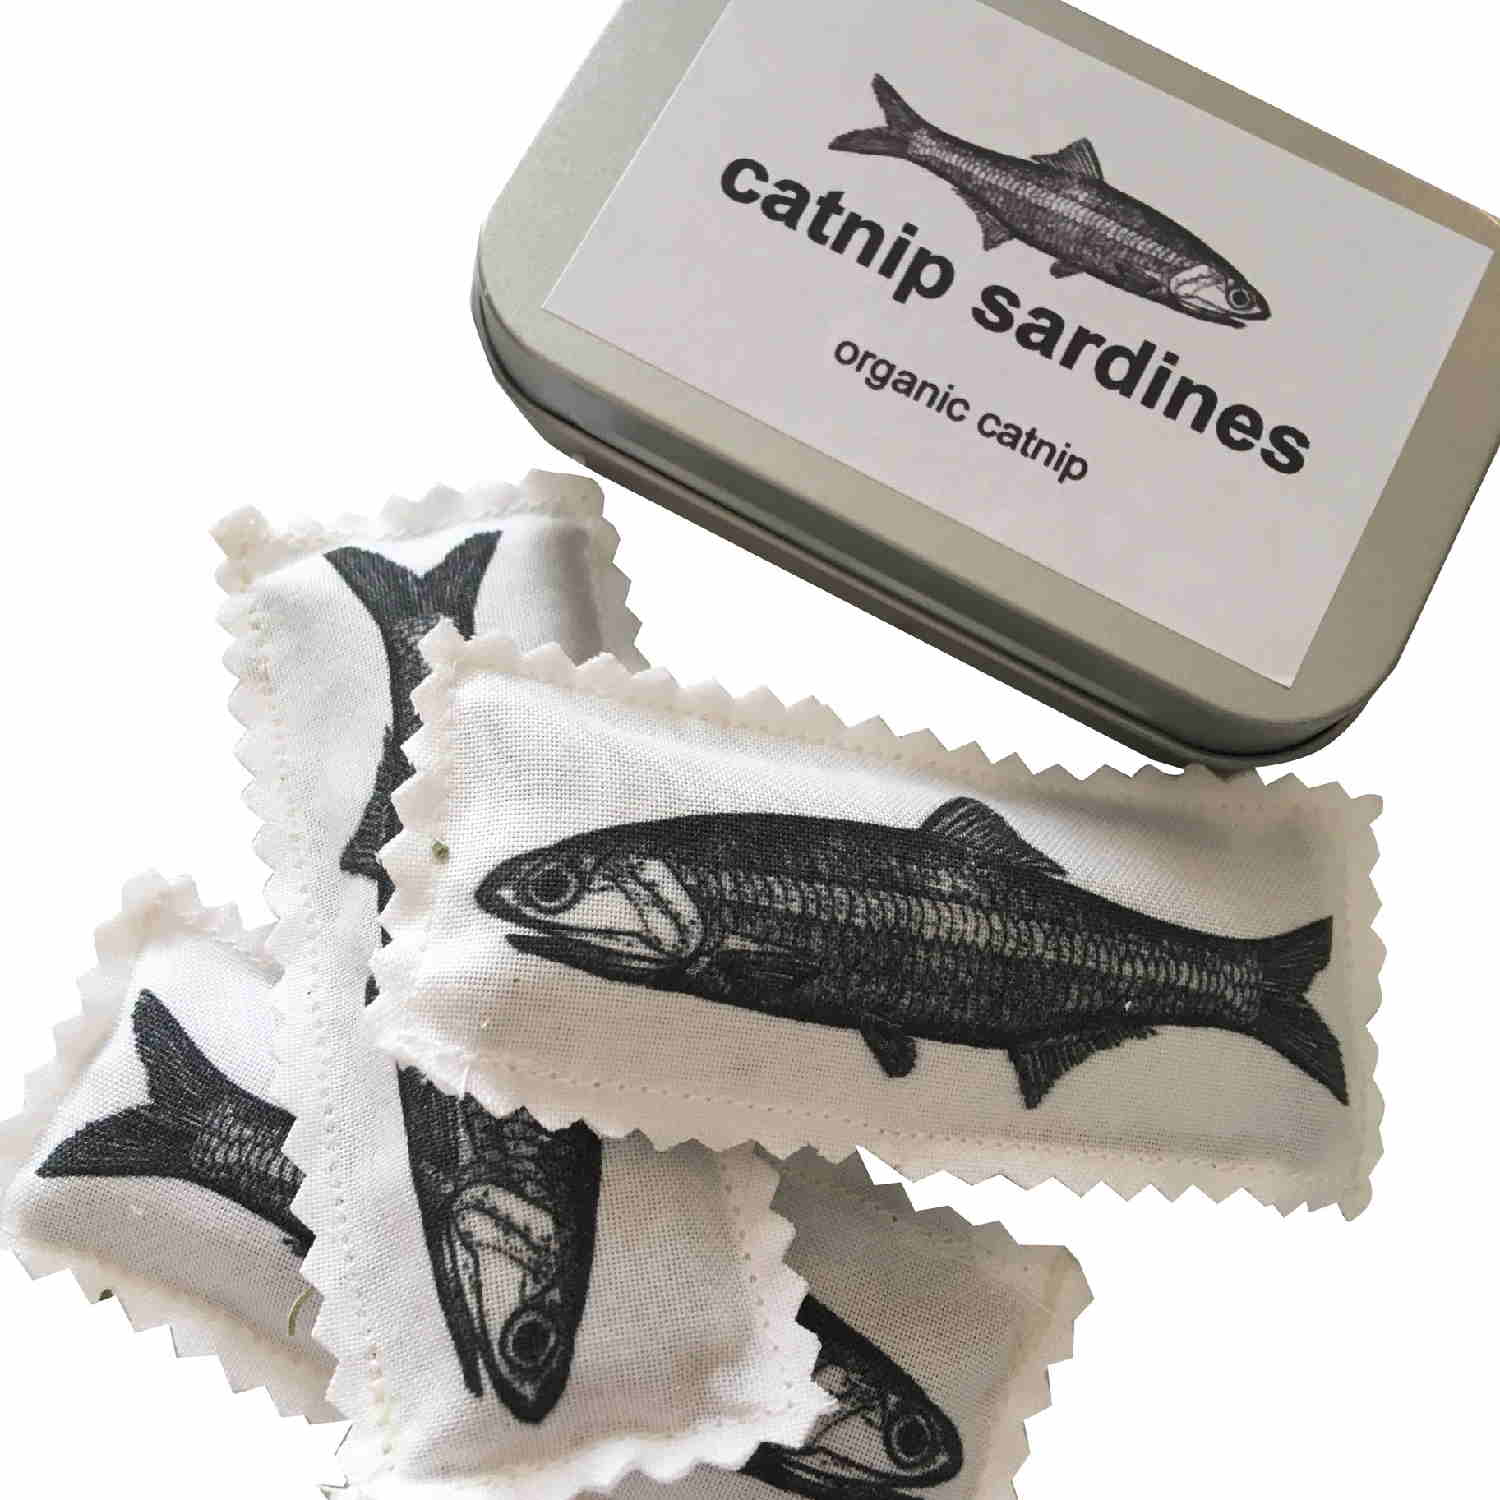 Organic Catnip Sardines Cat Toy - Tin and Sardines - Floyd & Fleet